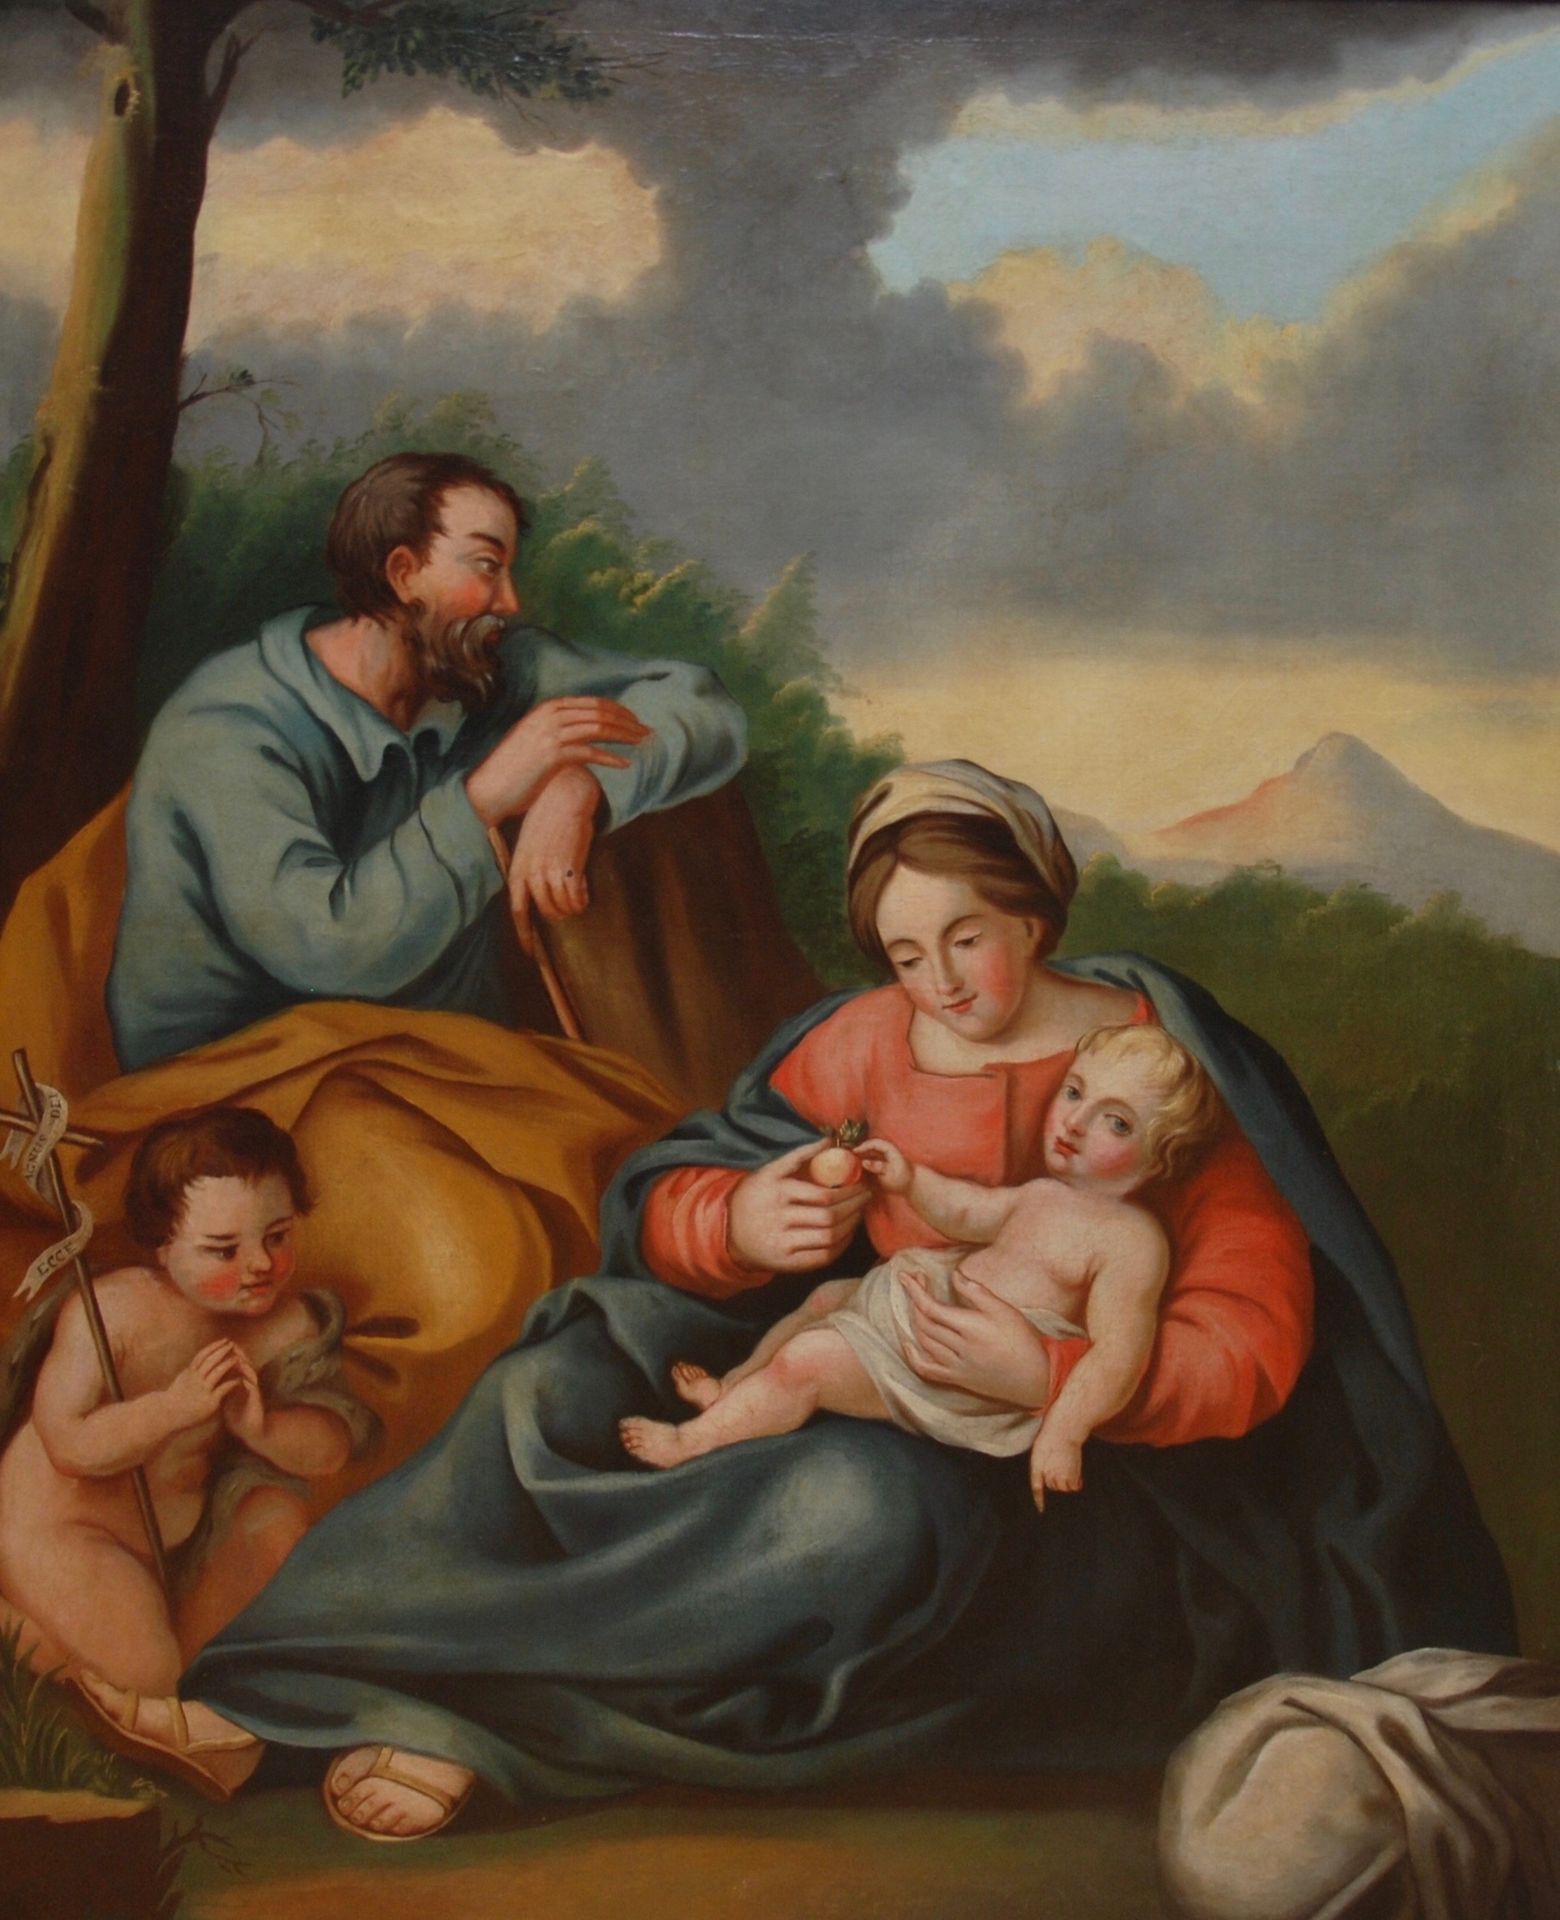 Olio su tela raff. Sacra famiglia con San 布面油画圣家族与圣约翰，18世纪
尺寸：104.5x126厘米